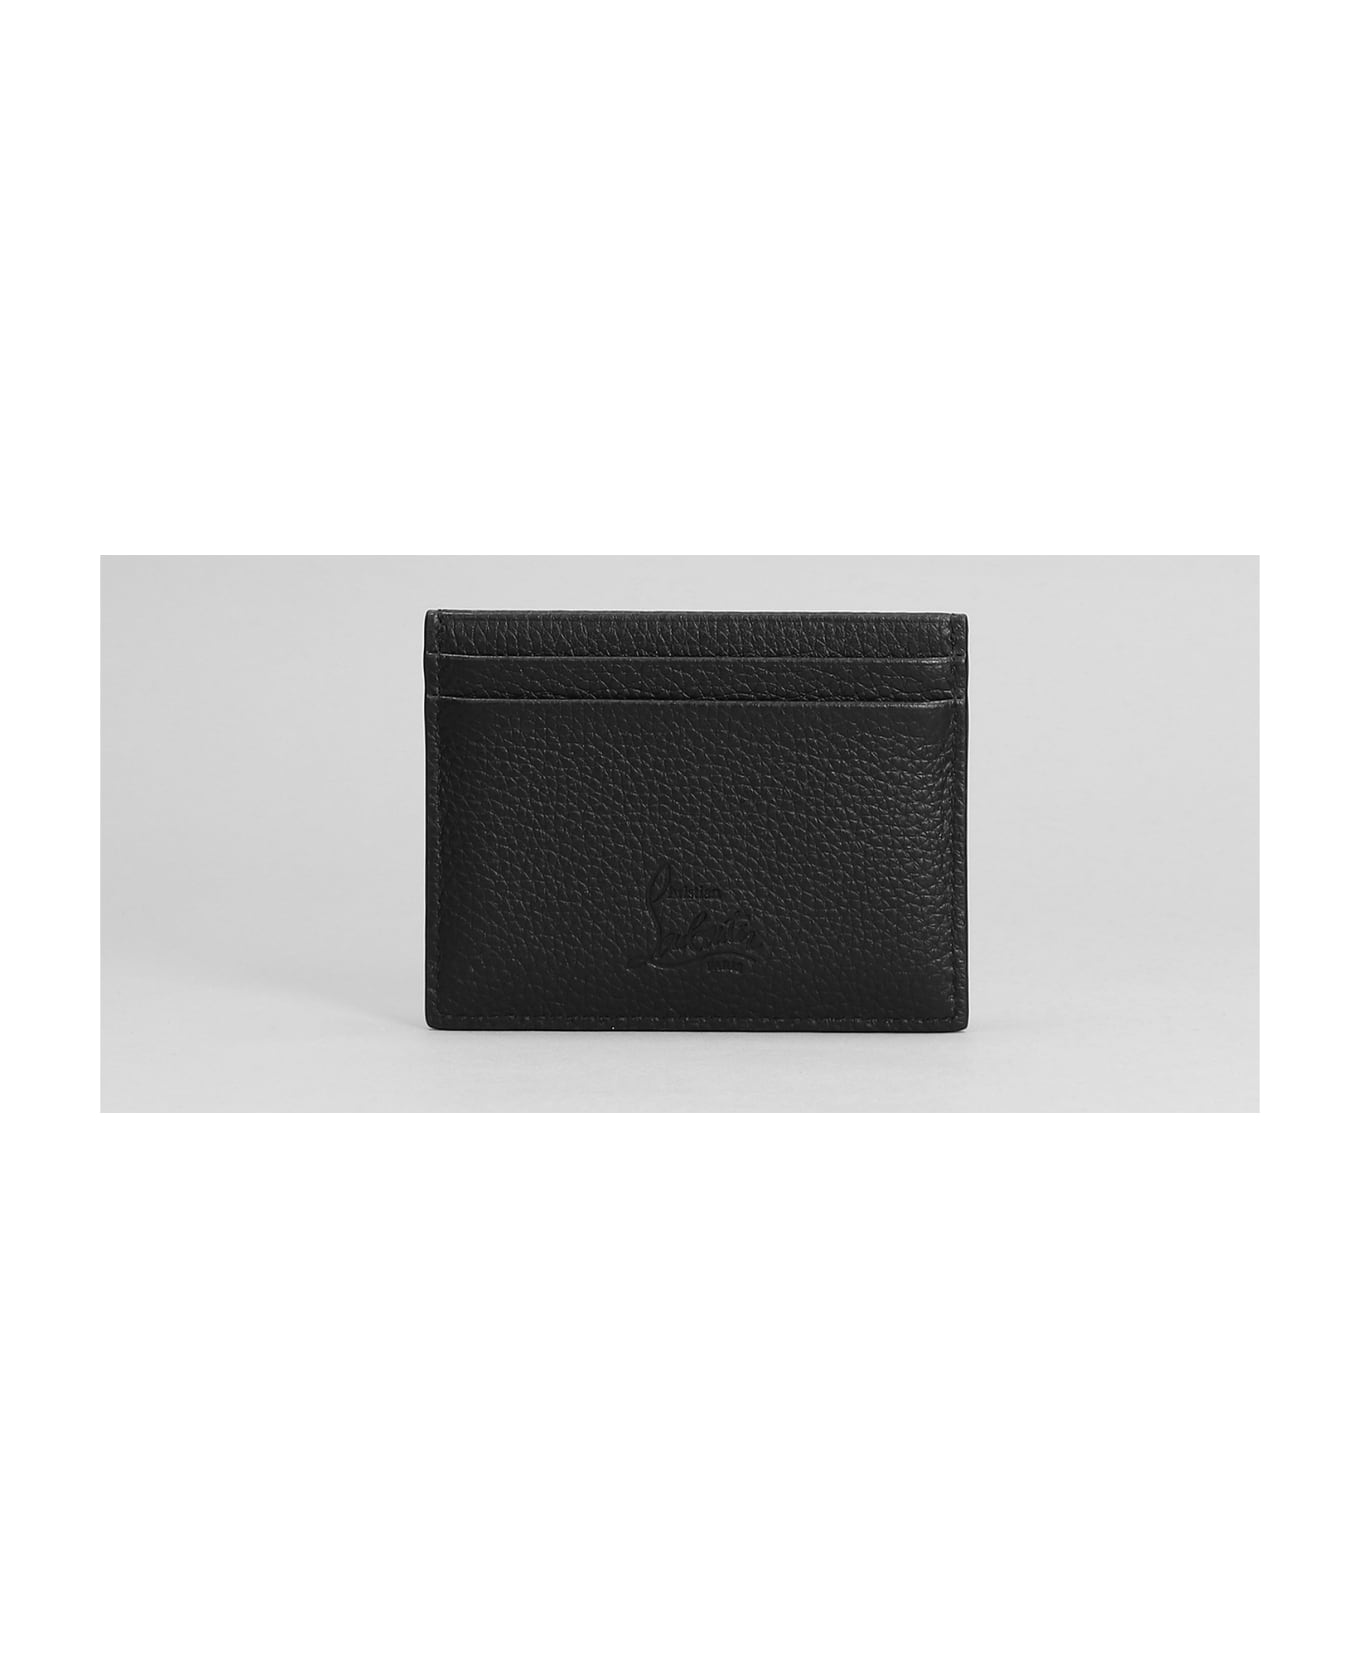 Christian Louboutin W Kios Wallet In Black Leather - black